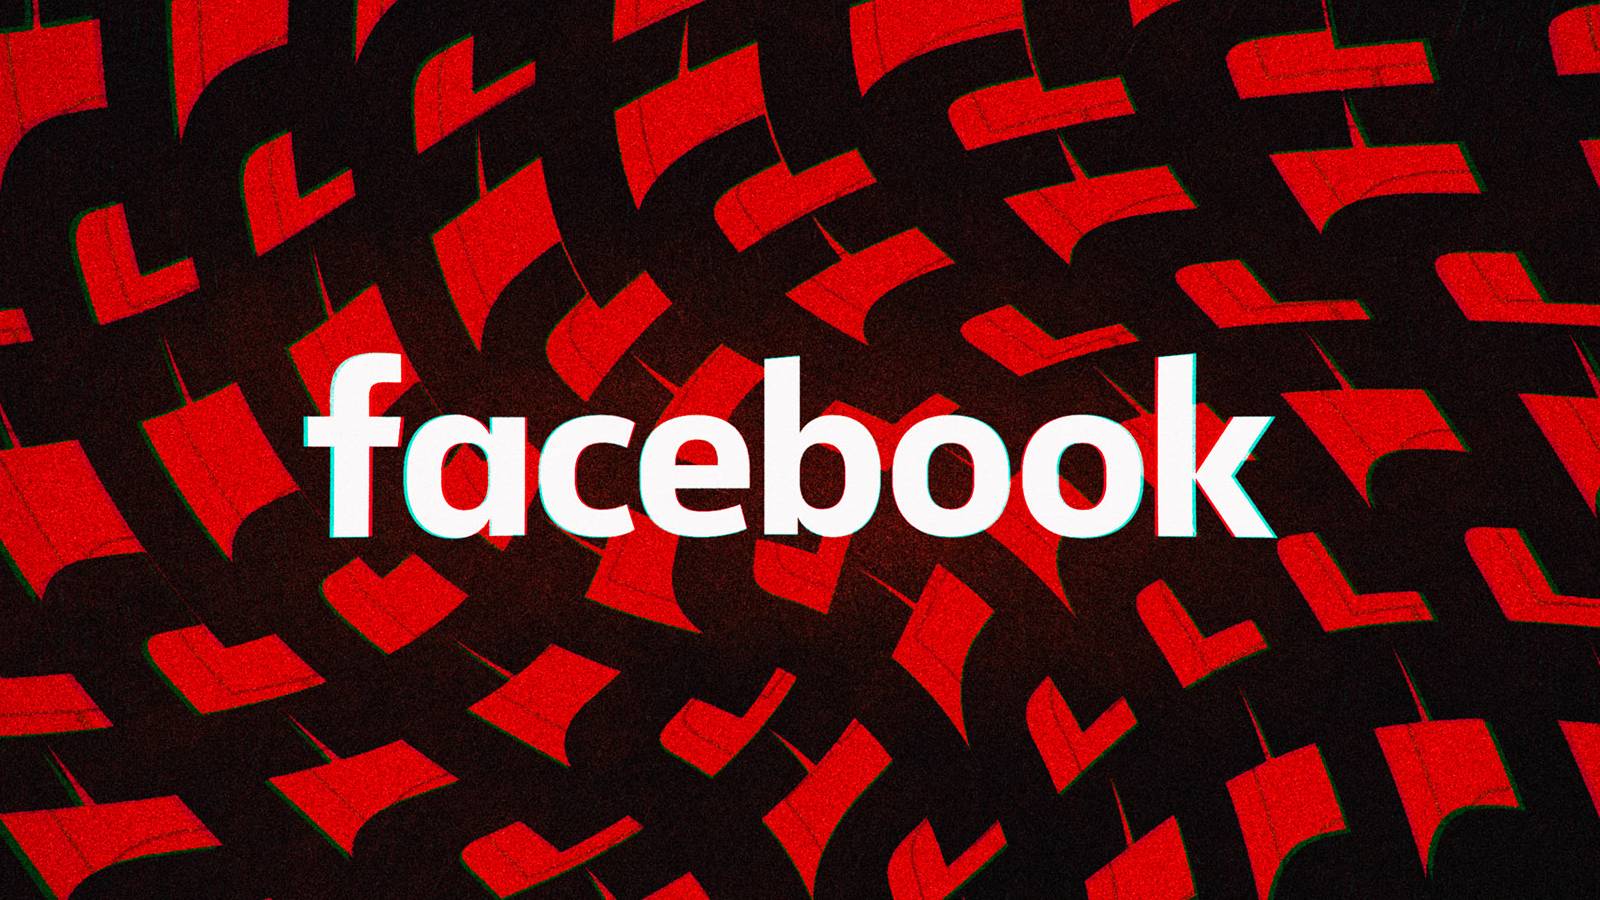 Facebook Update aduce pe iPhone si Android Noutati Astazi